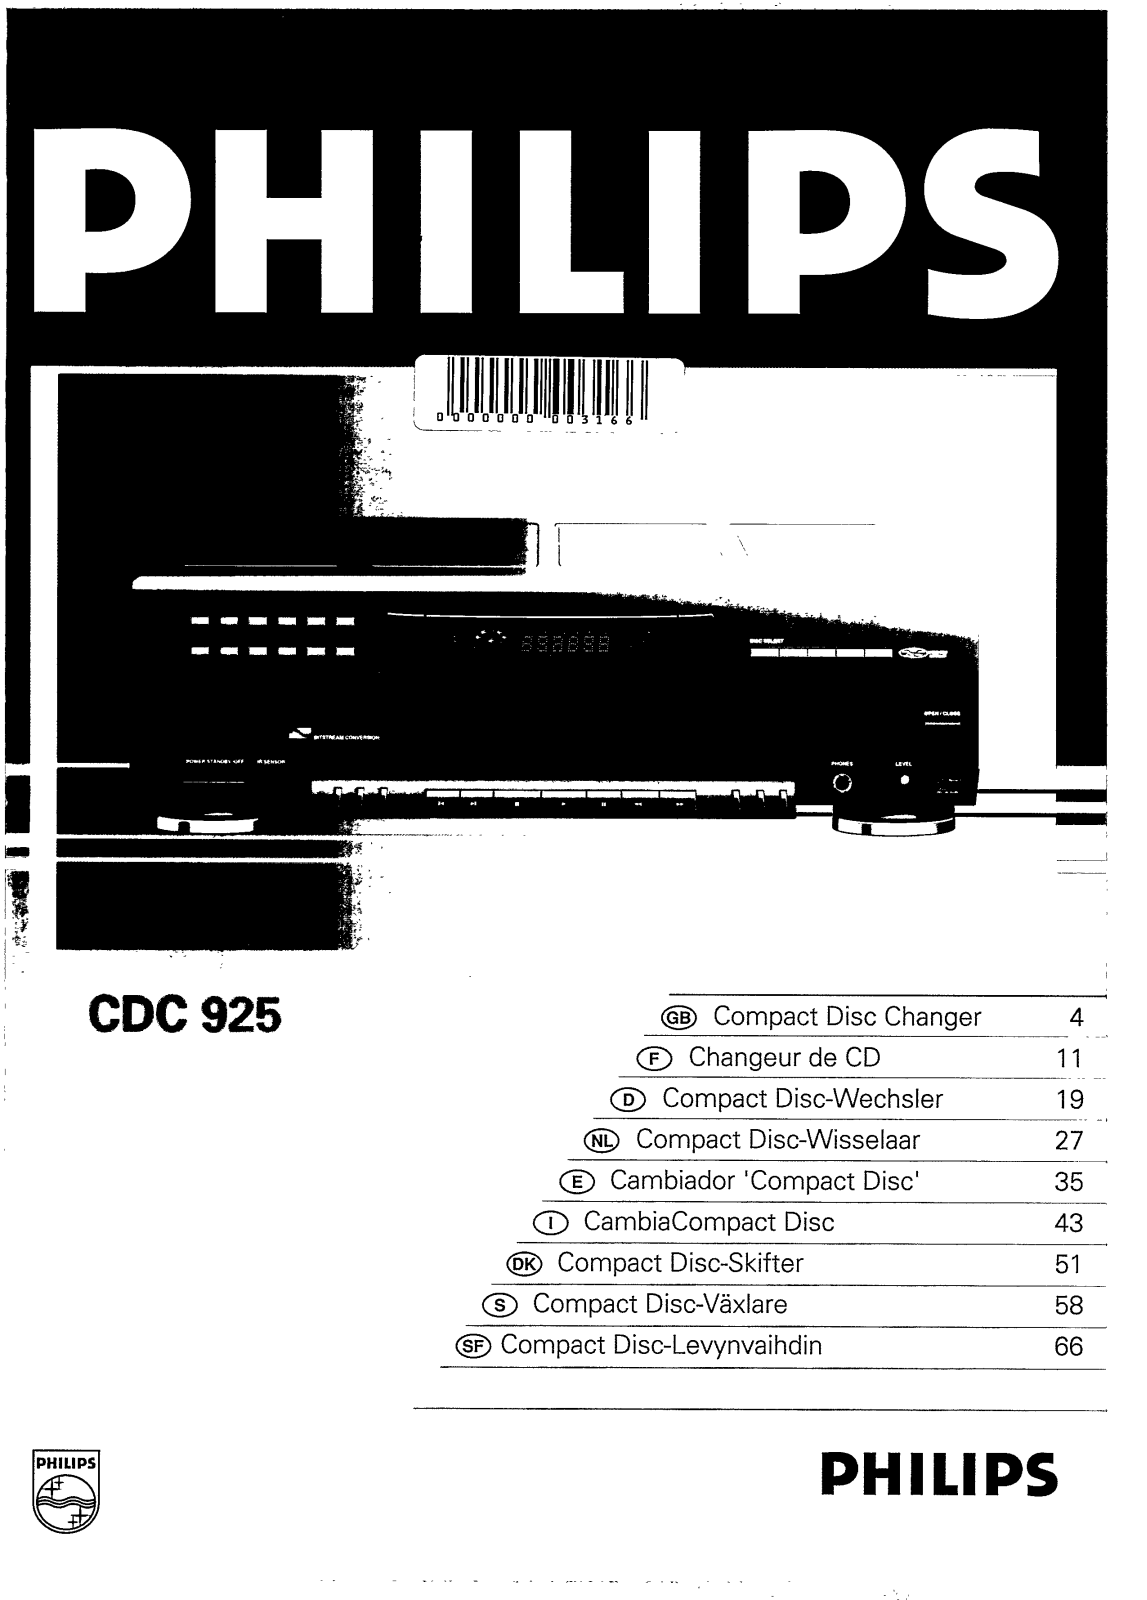 Philips CDC 925 User Manual